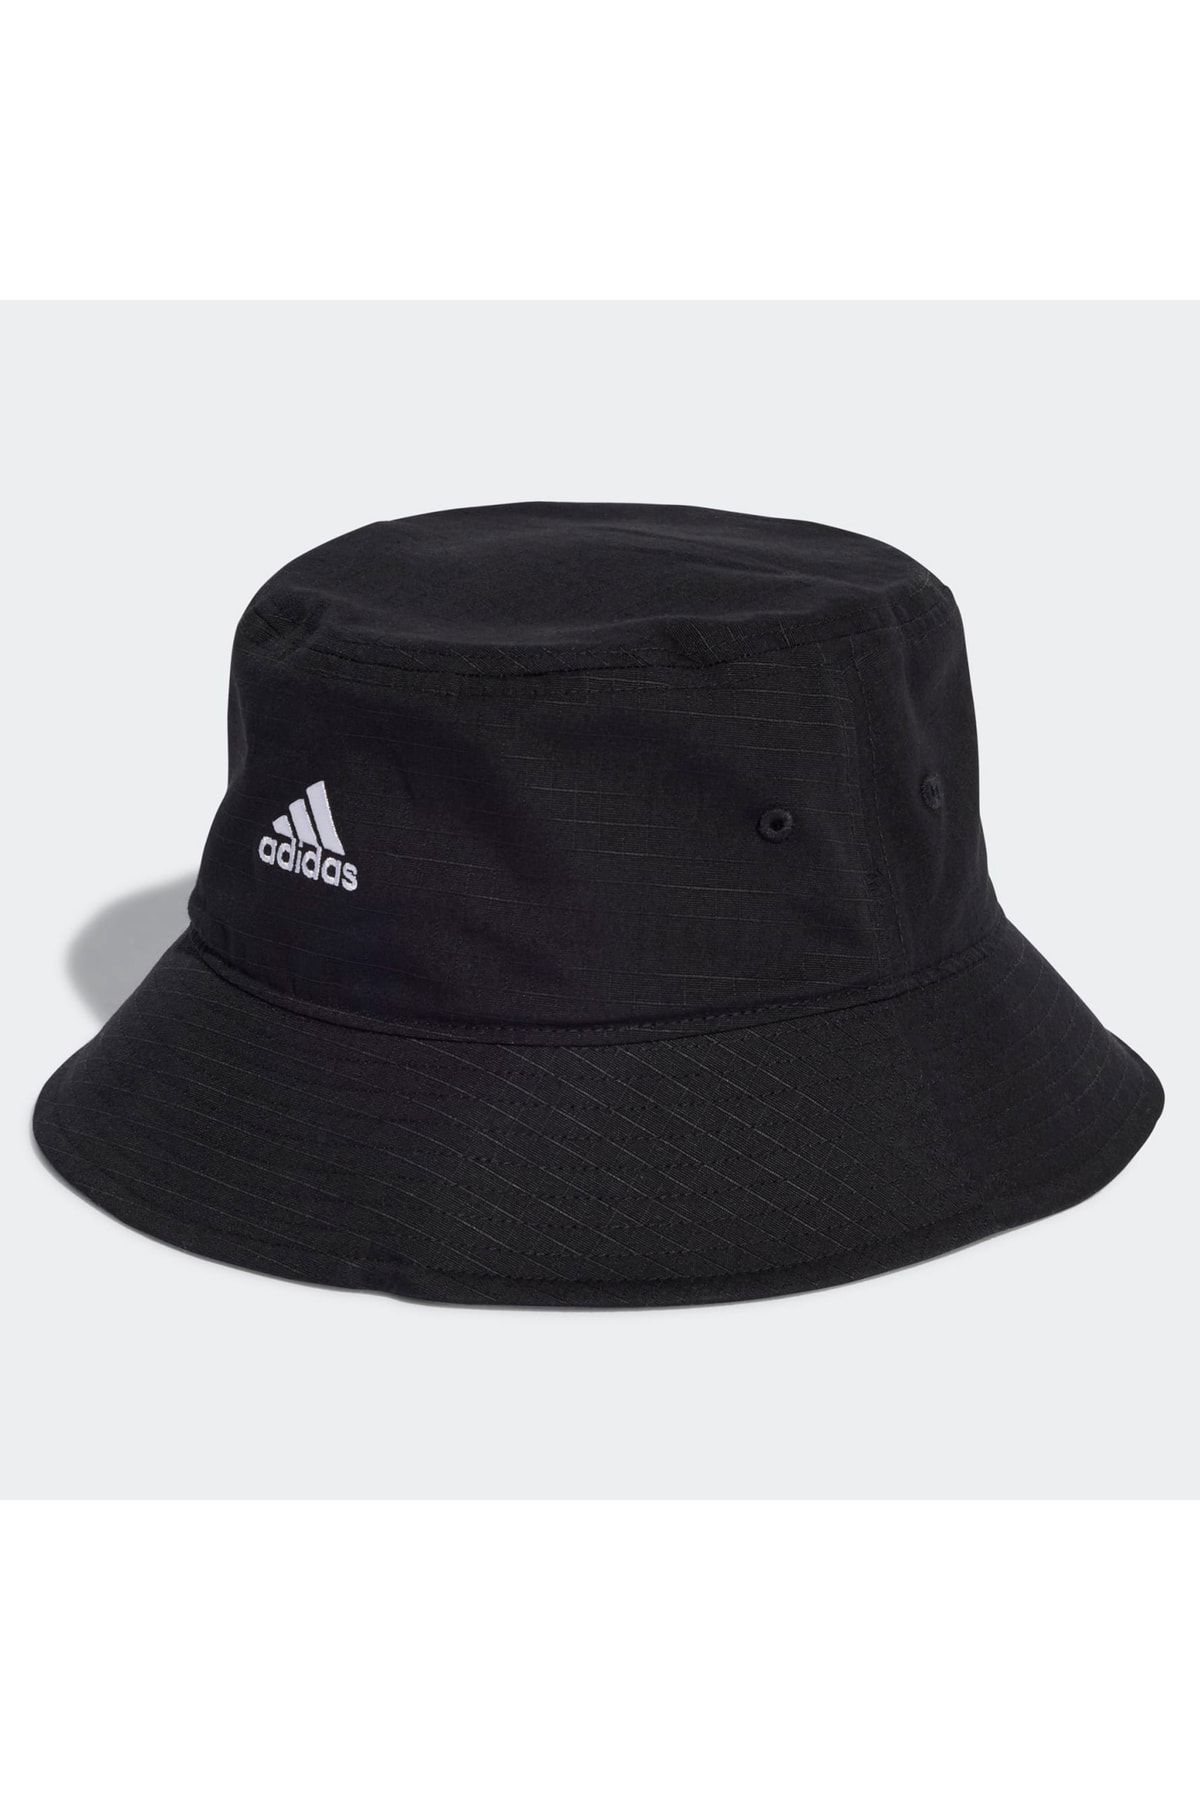 adidas Classic Siyah Şapka (ht2029)